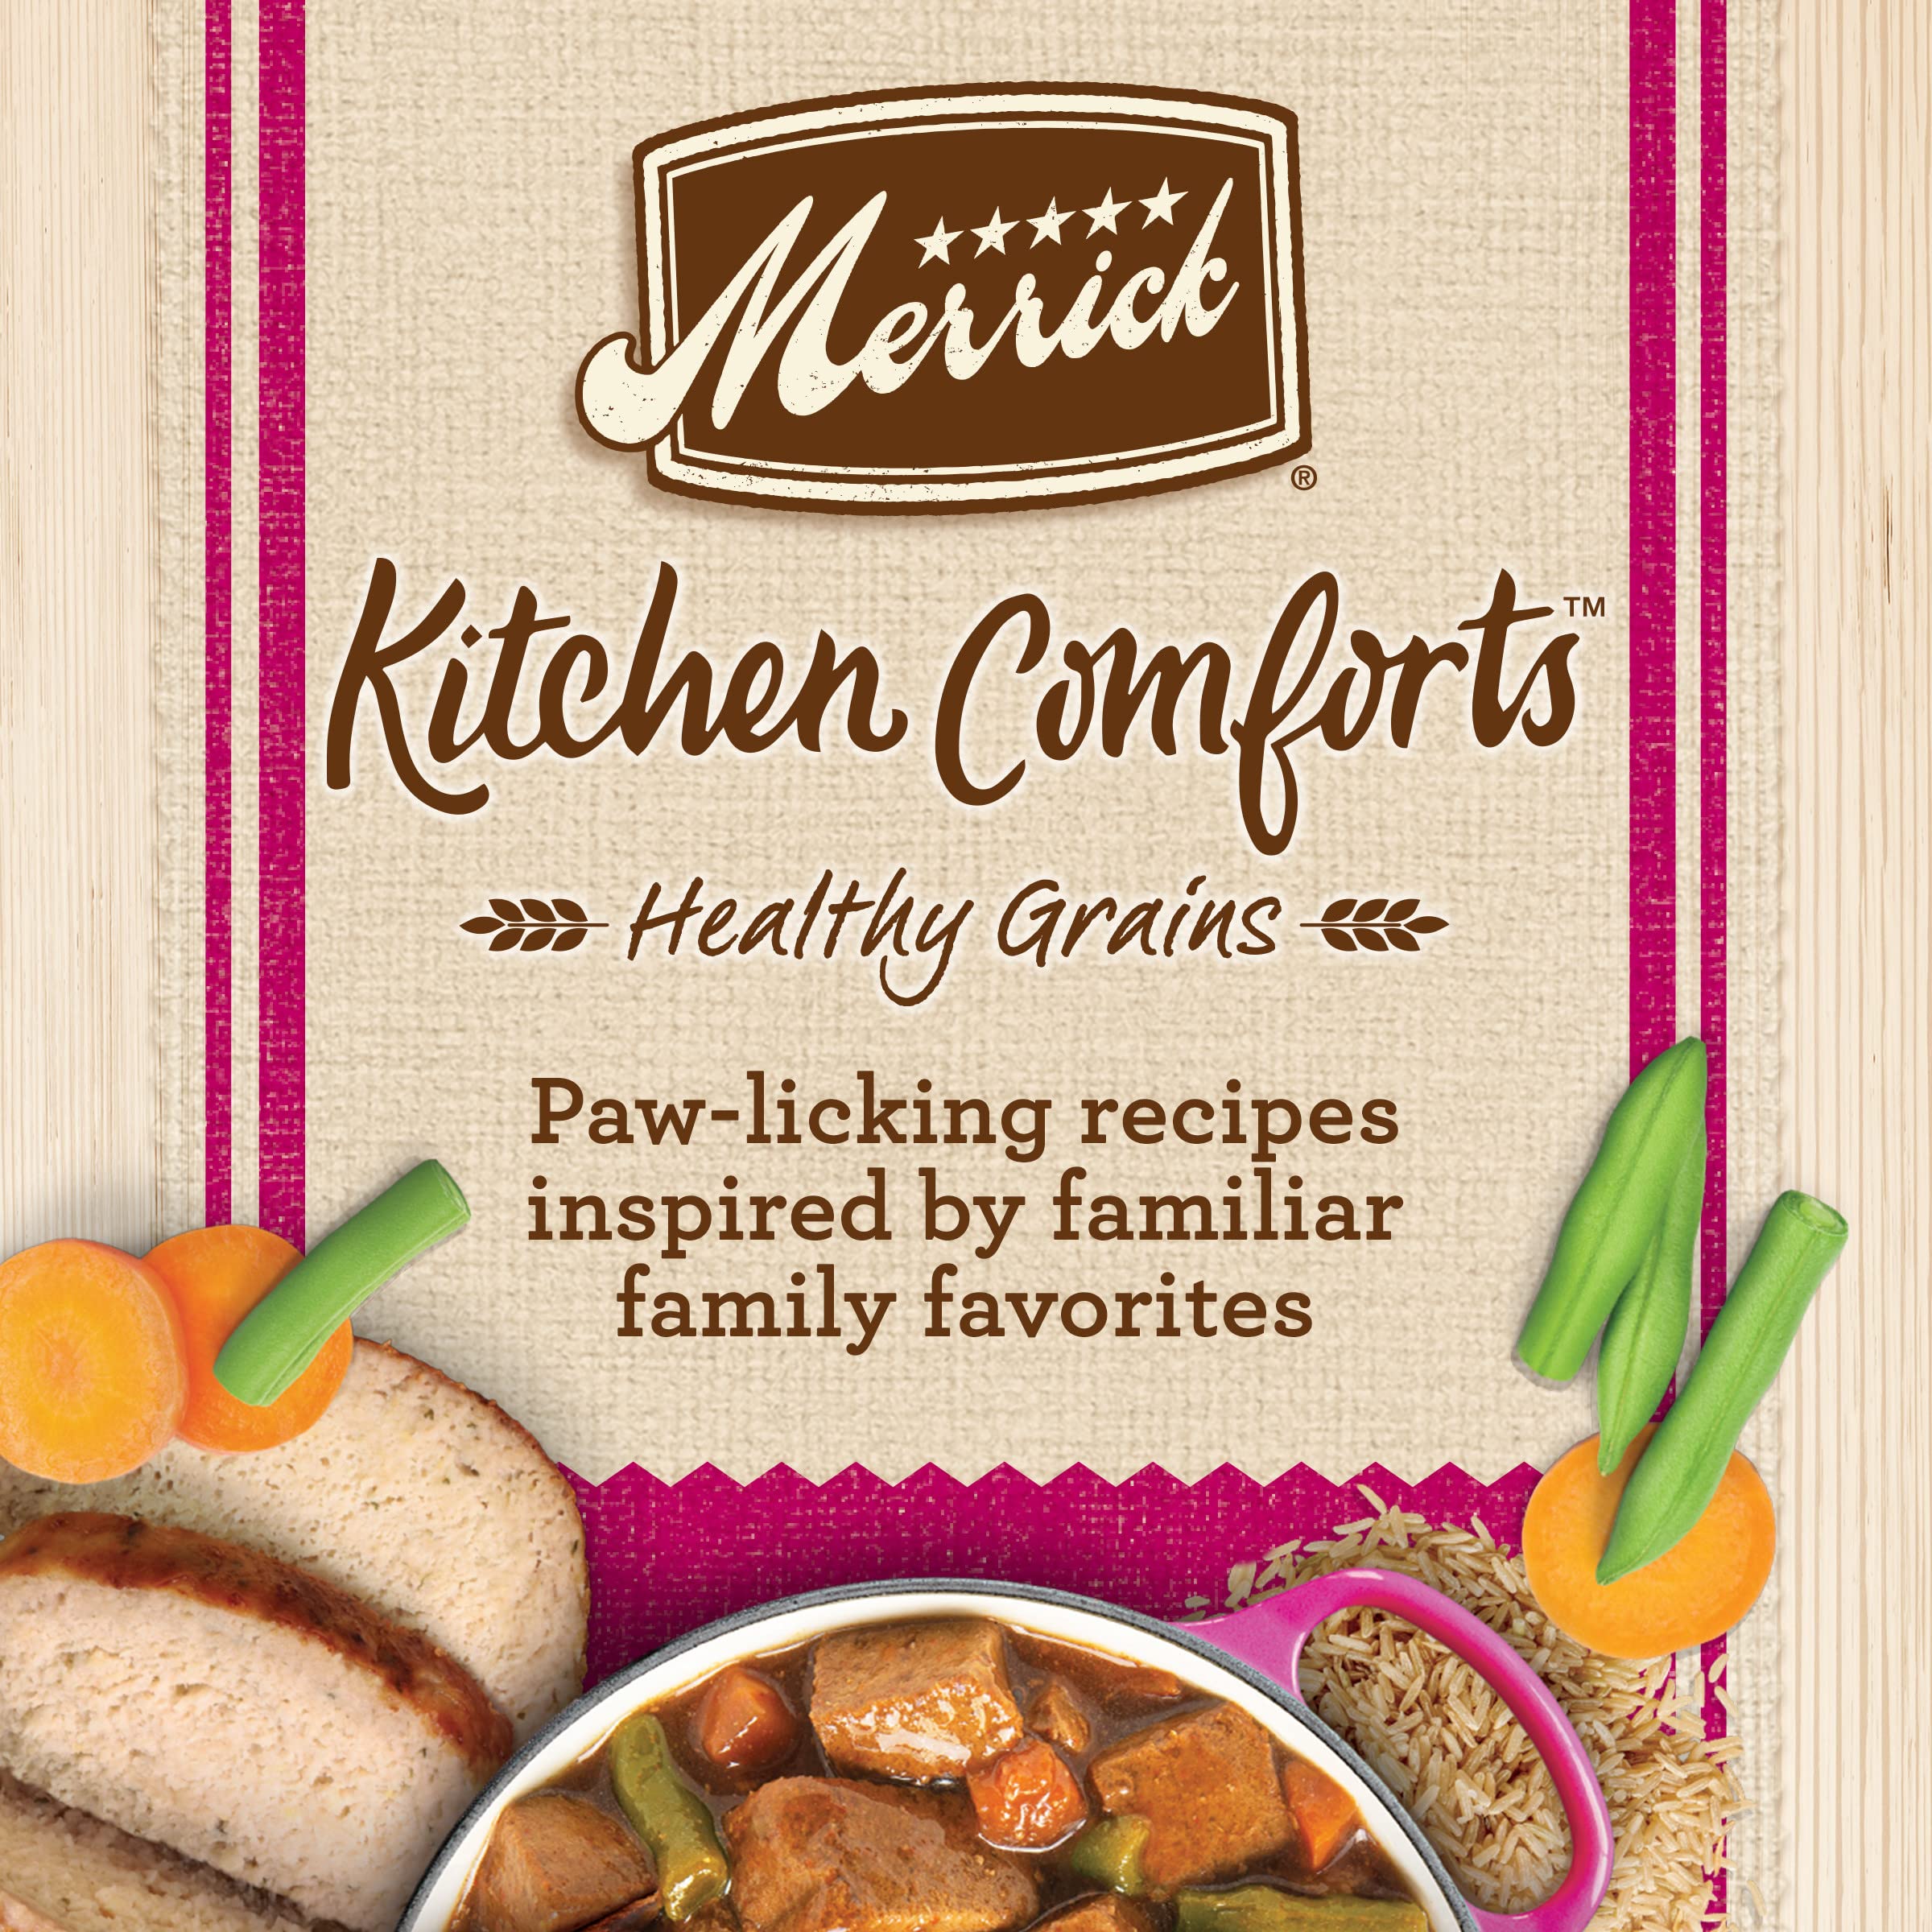 Merrick Healthy Grains Kitchen Comforts Turkey Loaf Canned Dog Food - 12.7 Oz - Case of 12  